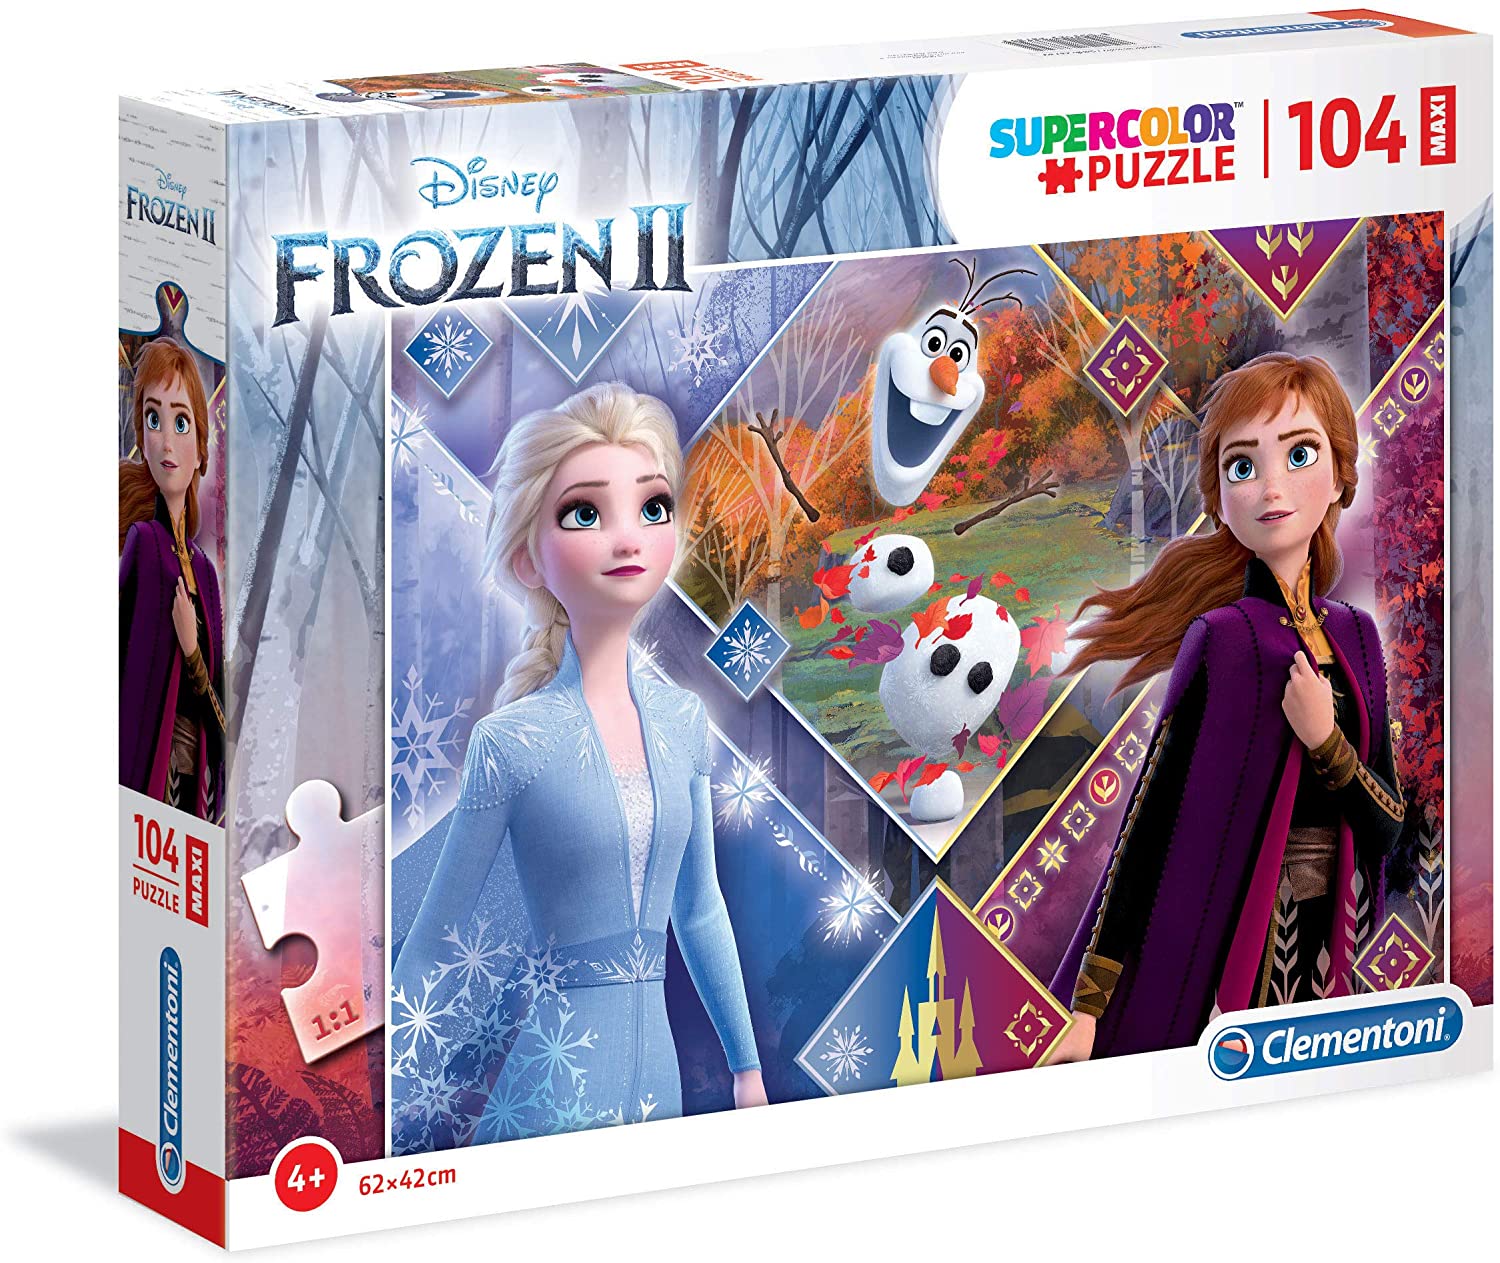 Puzzle Pezzi 104 Maxi 2 Frozen 2 toysvaldichiana.it 